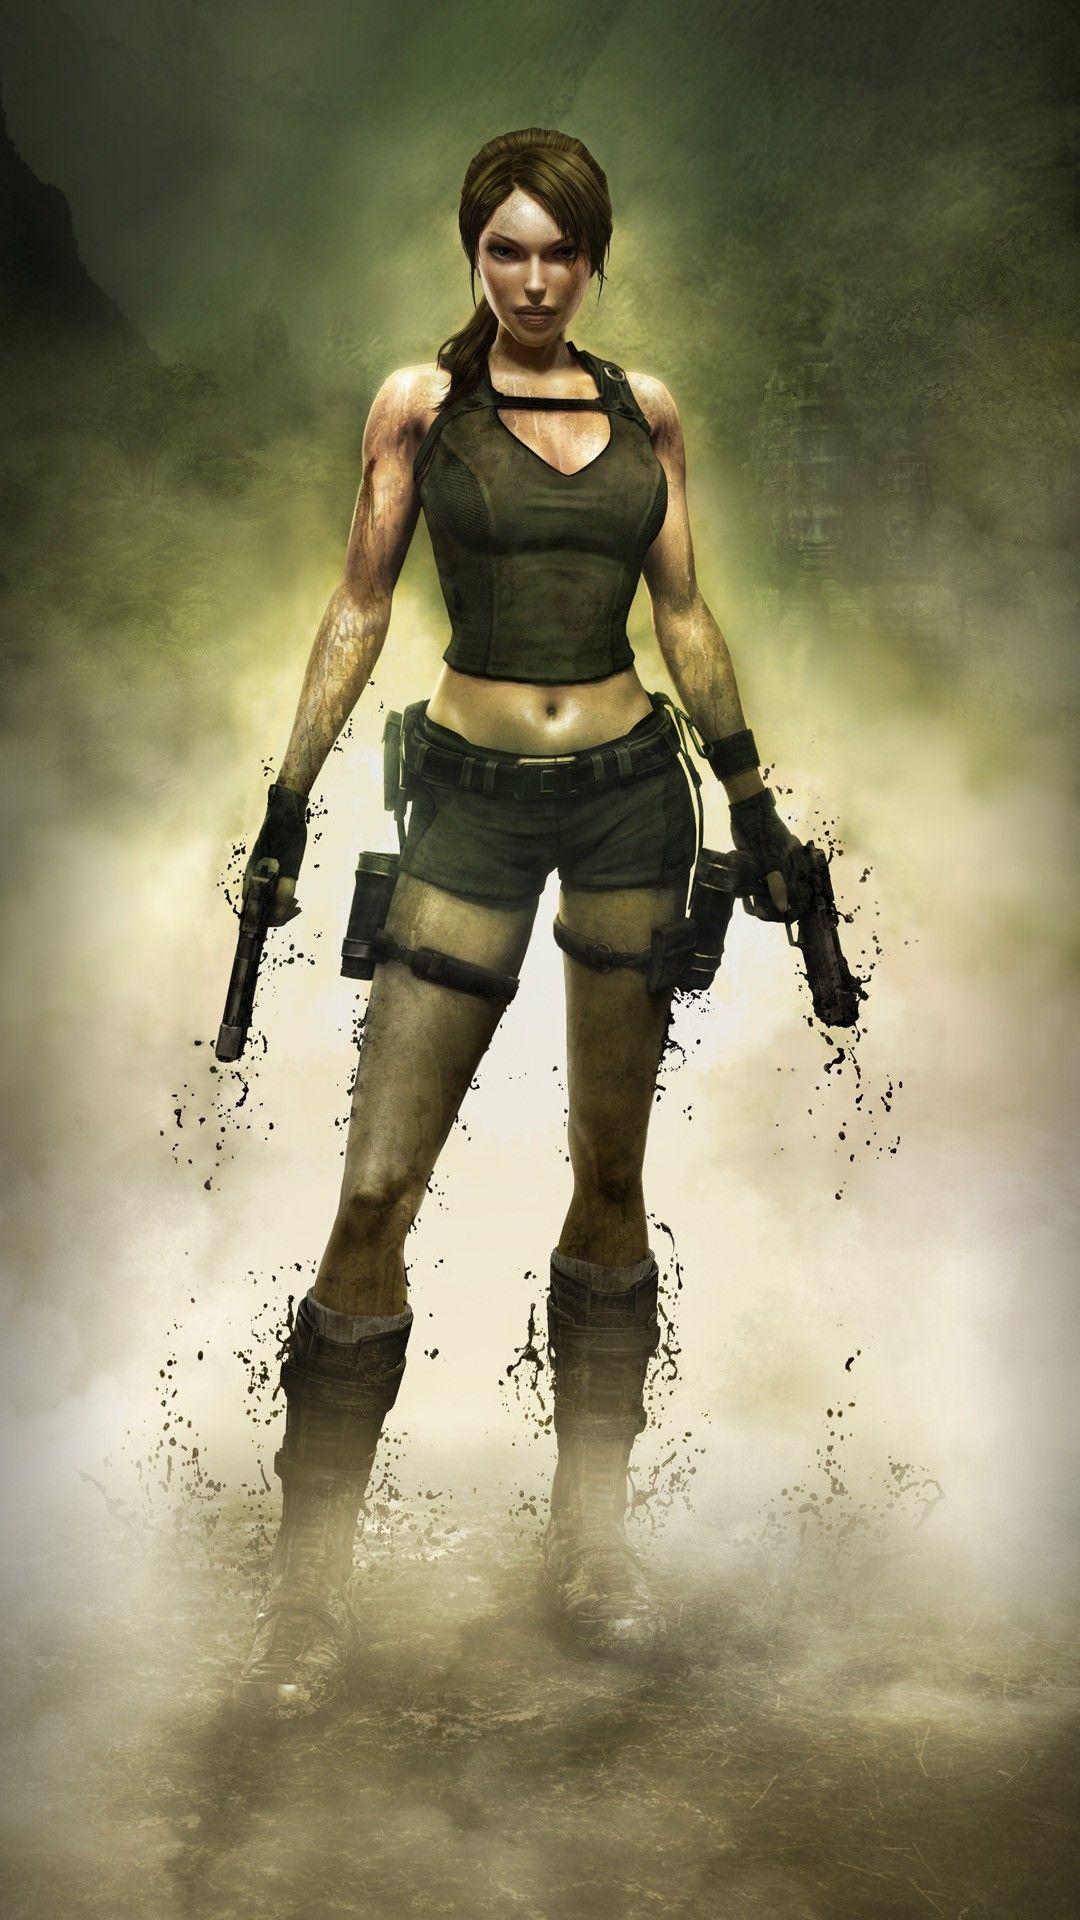 Lara Croft Raider Game mobile wallpaper download